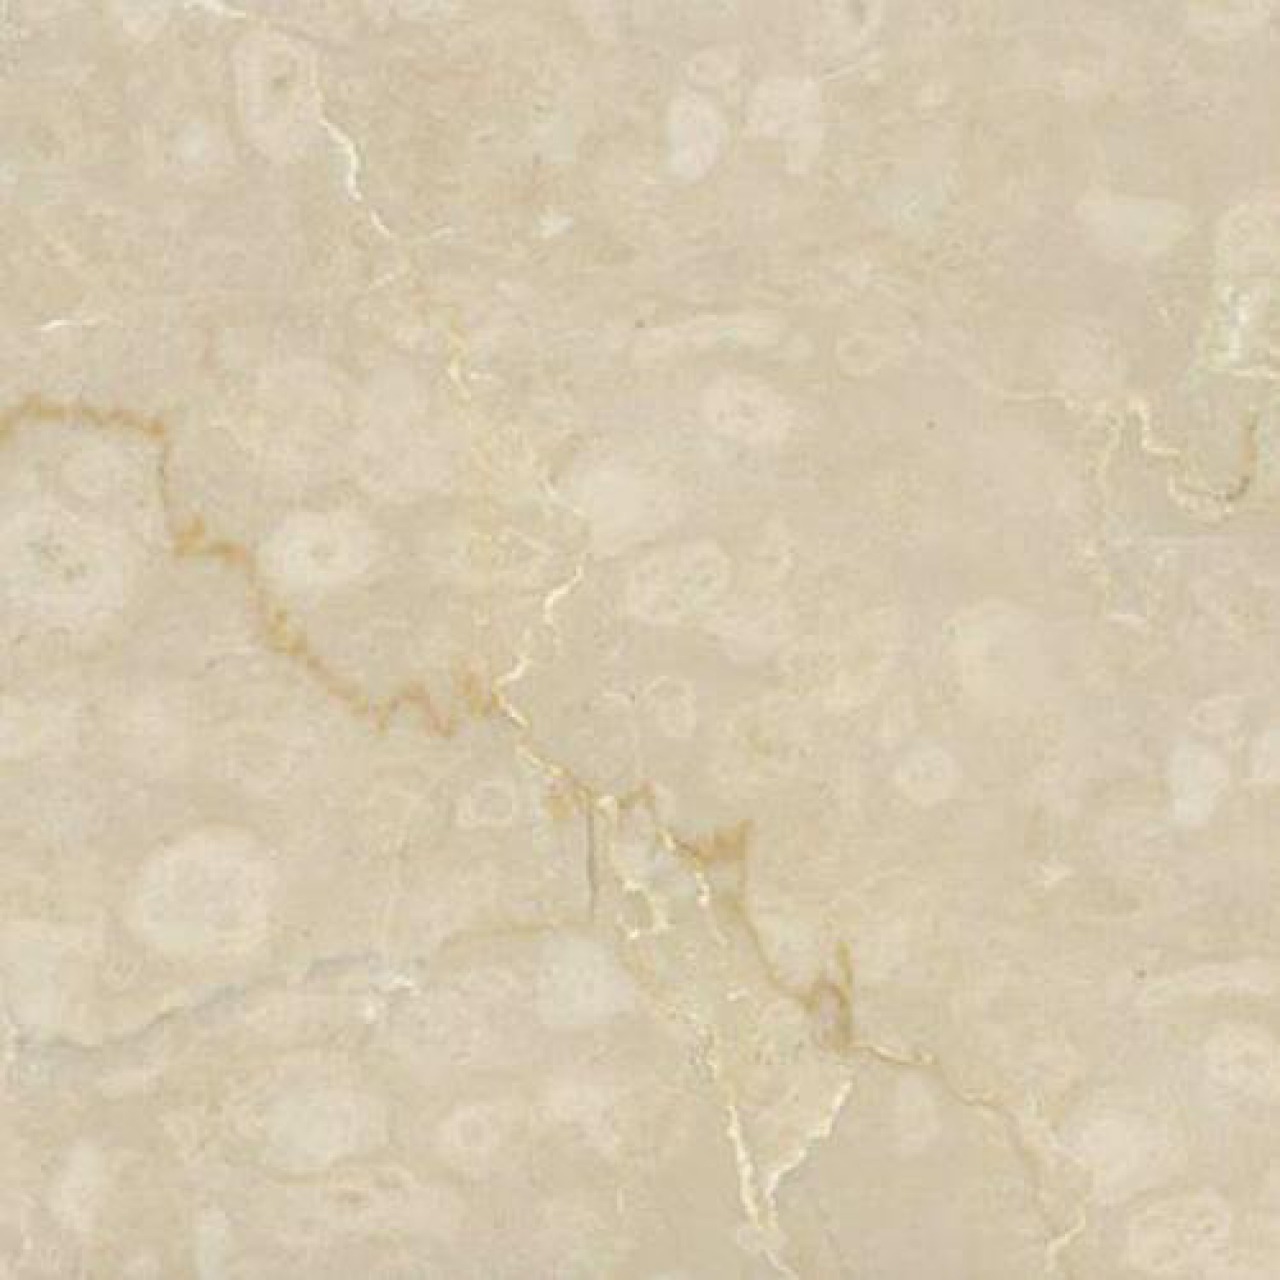 Ramella Graniti Slabs  in polished Botticino Semiclassico